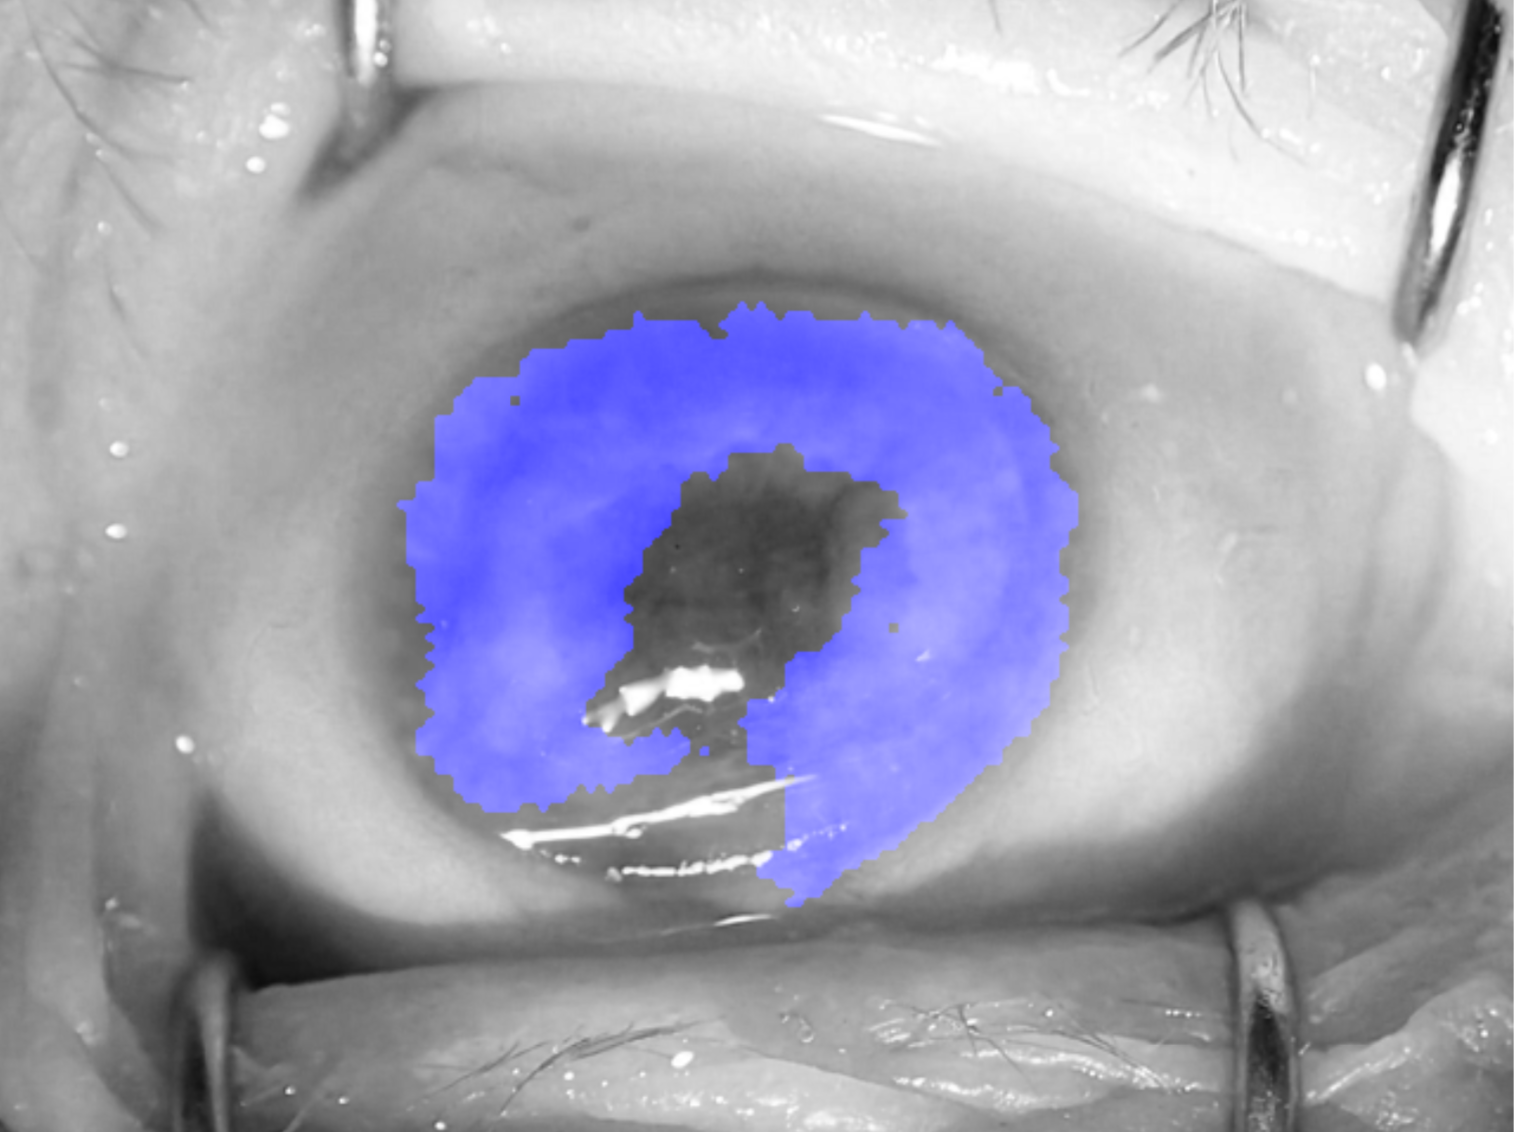 170000-iris-image-segmentation-under-troublesome-conditions